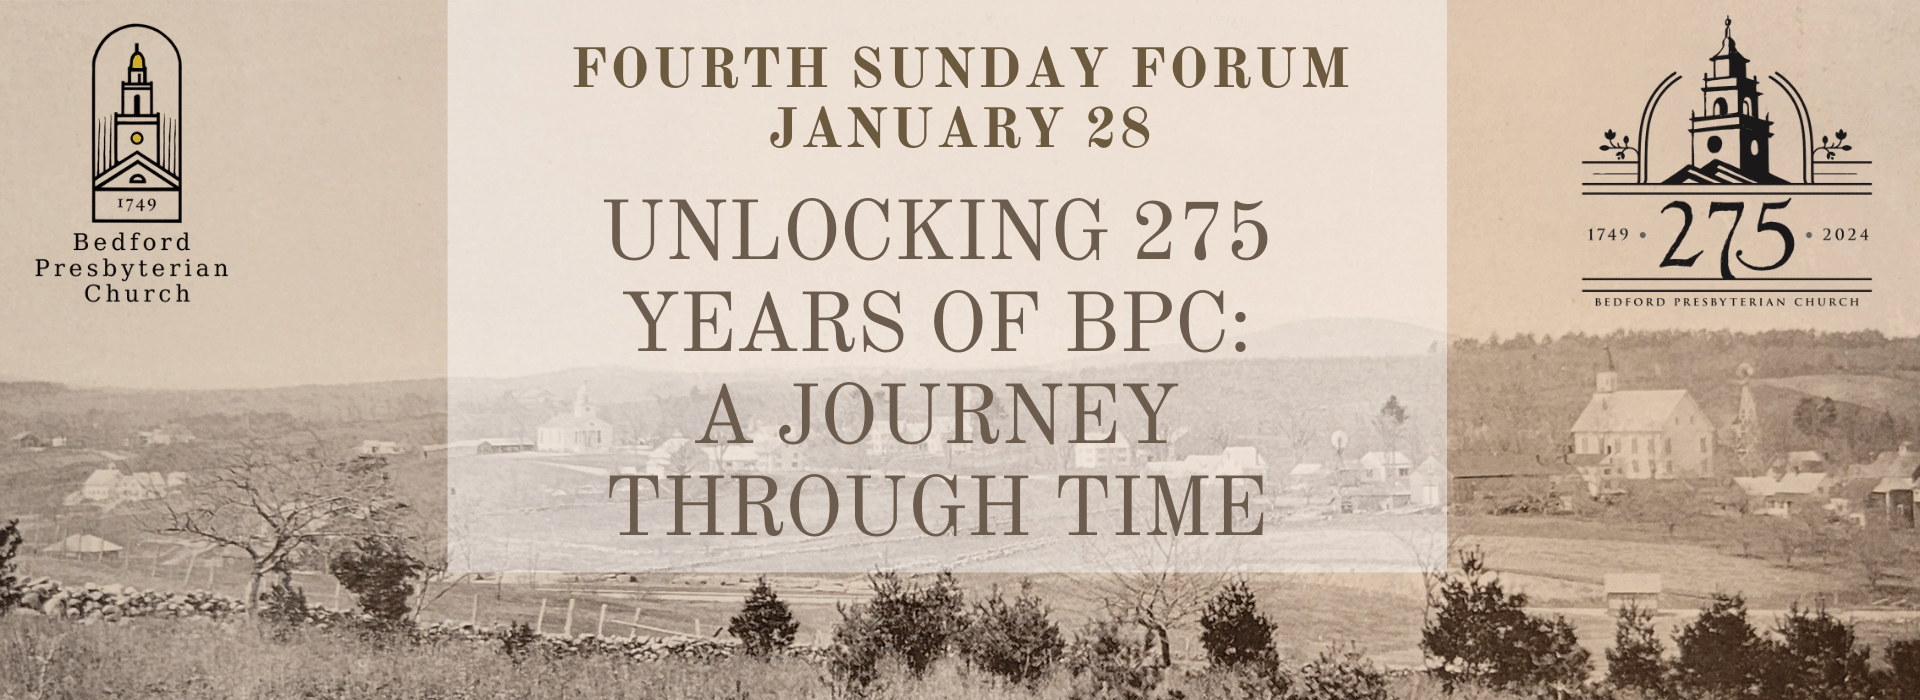 4th Sunday Forum Jan 28 2024